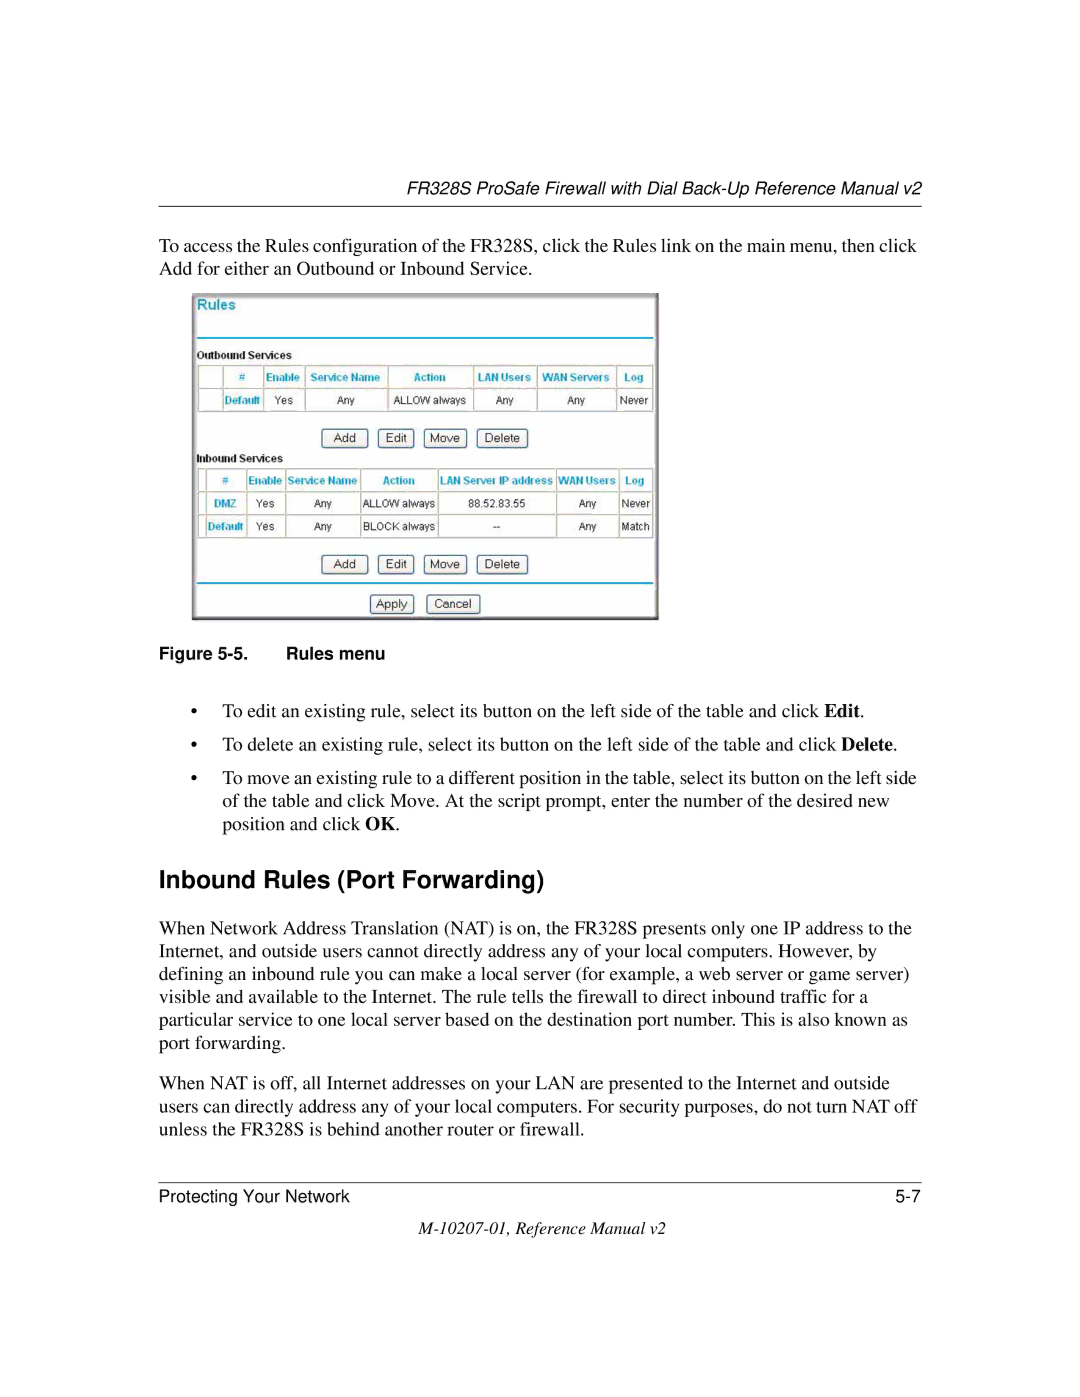 NETGEAR FR328S manual Inbound Rules Port Forwarding 